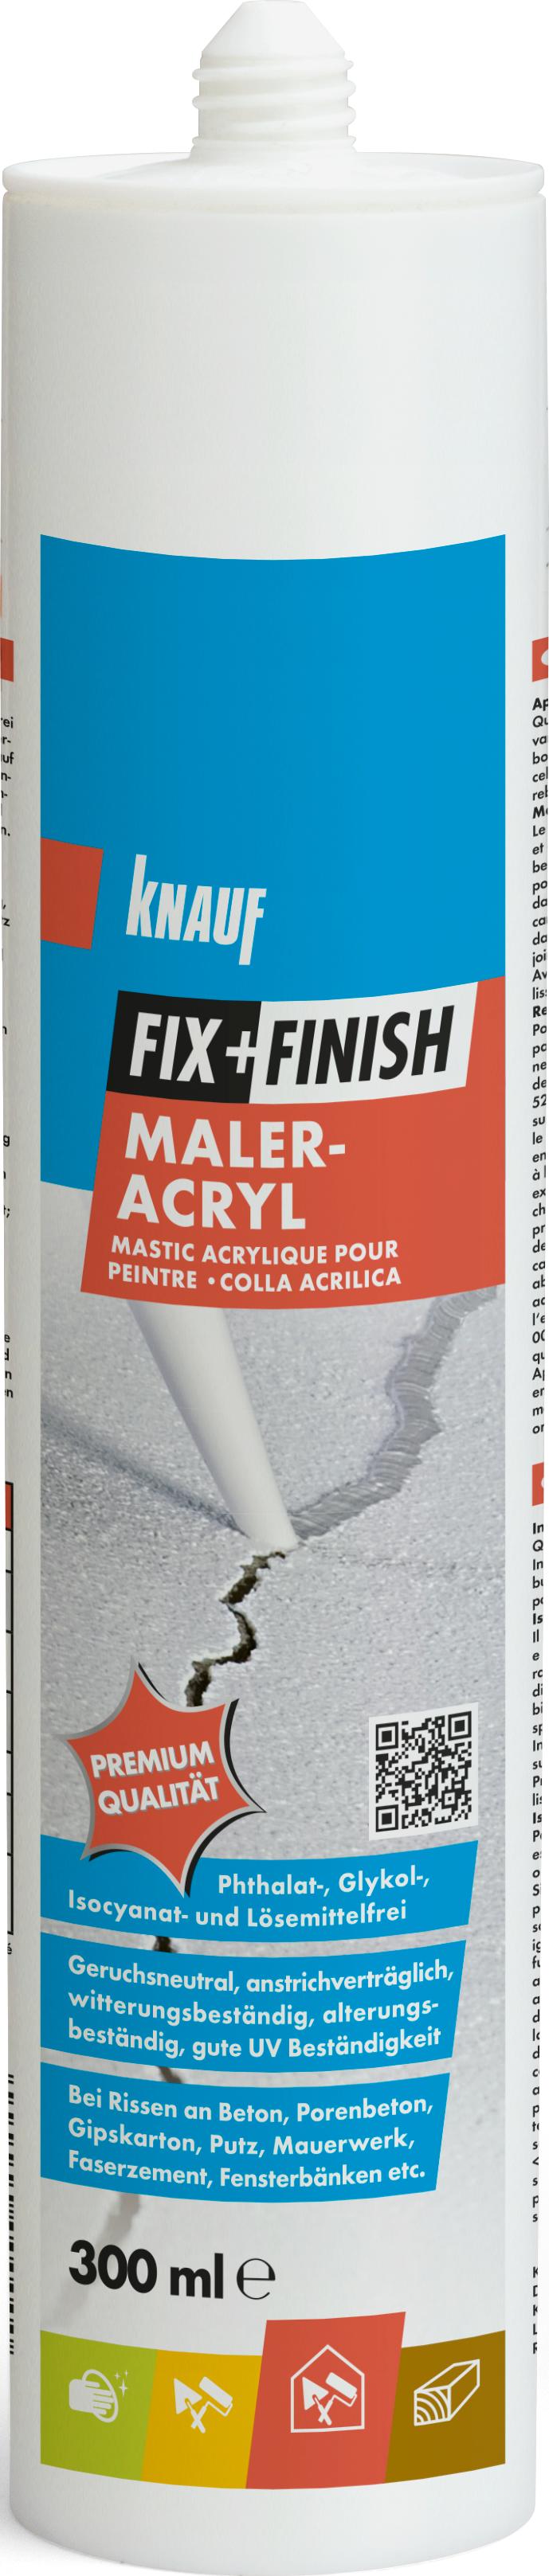 Knauf Fix + Finish Maler-Acryl, 300 ml